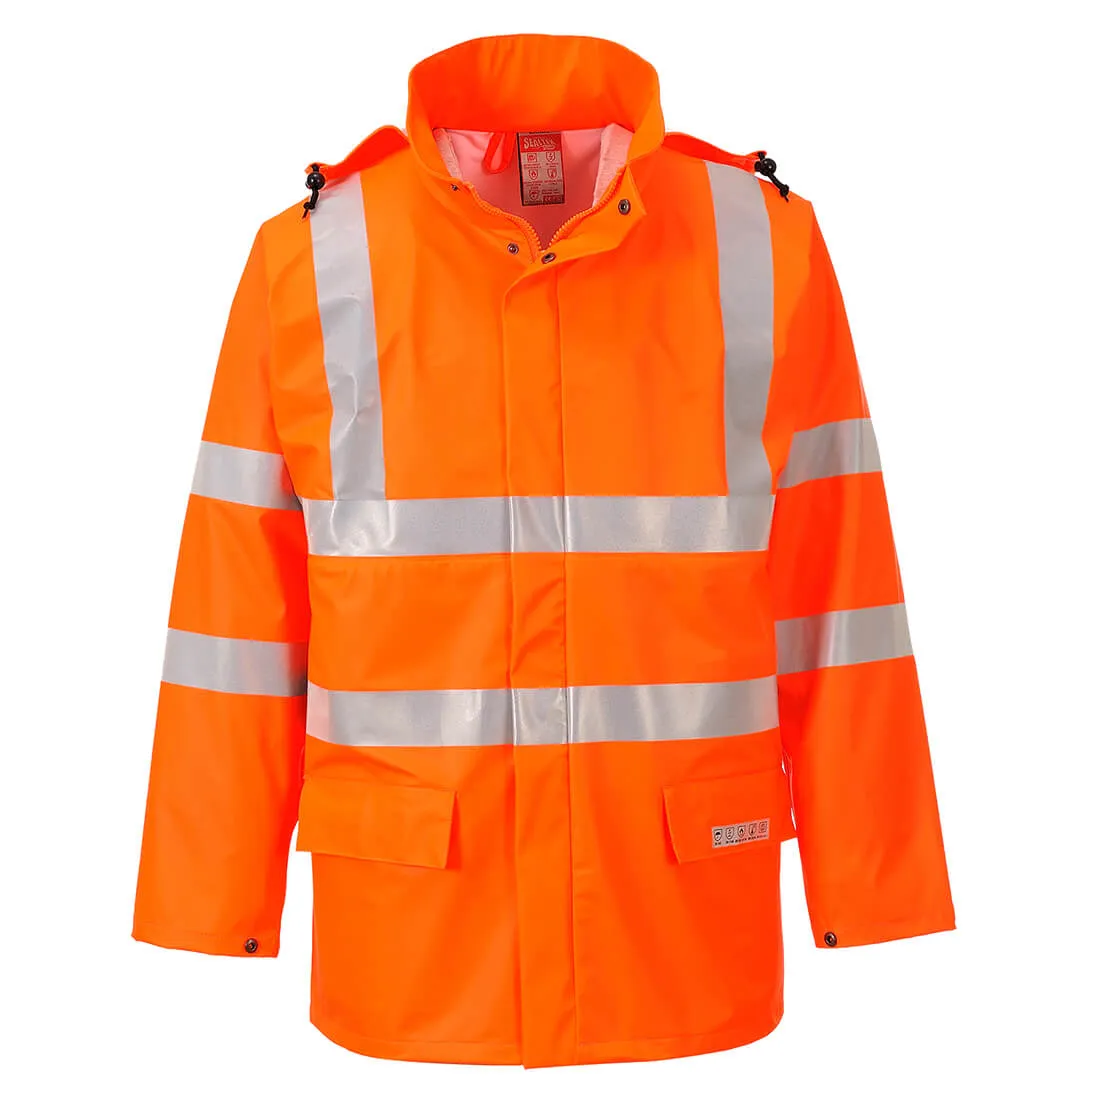 Sealtex Flame Resistant Hi Vis Jacket - Orange, L